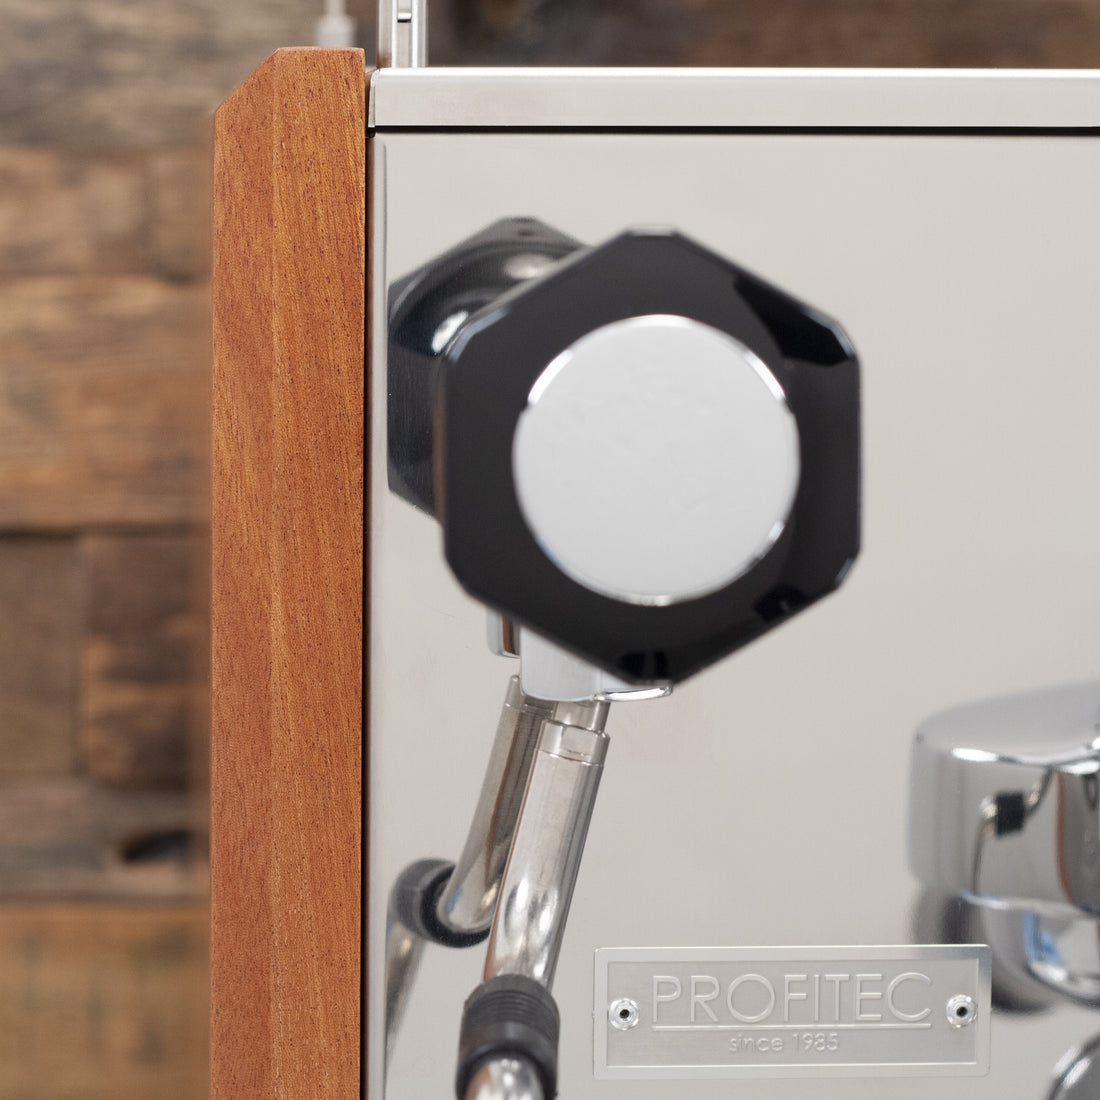 Profitec Pro 700 Espresso Machine with Flow Control - Sapele Mahogany